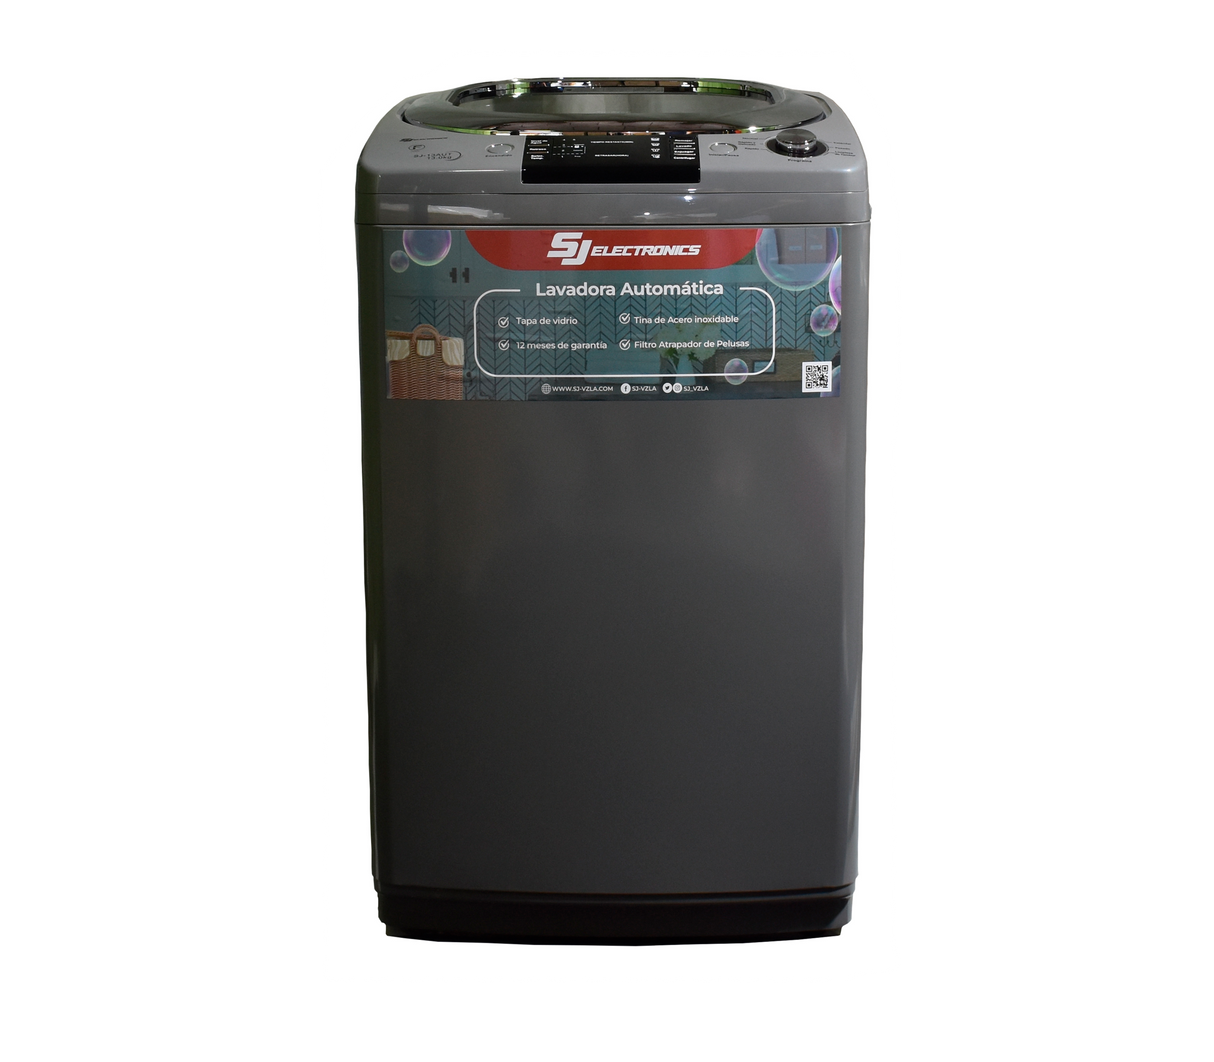 Lavadora automática 10 kg gris Sj Electronics